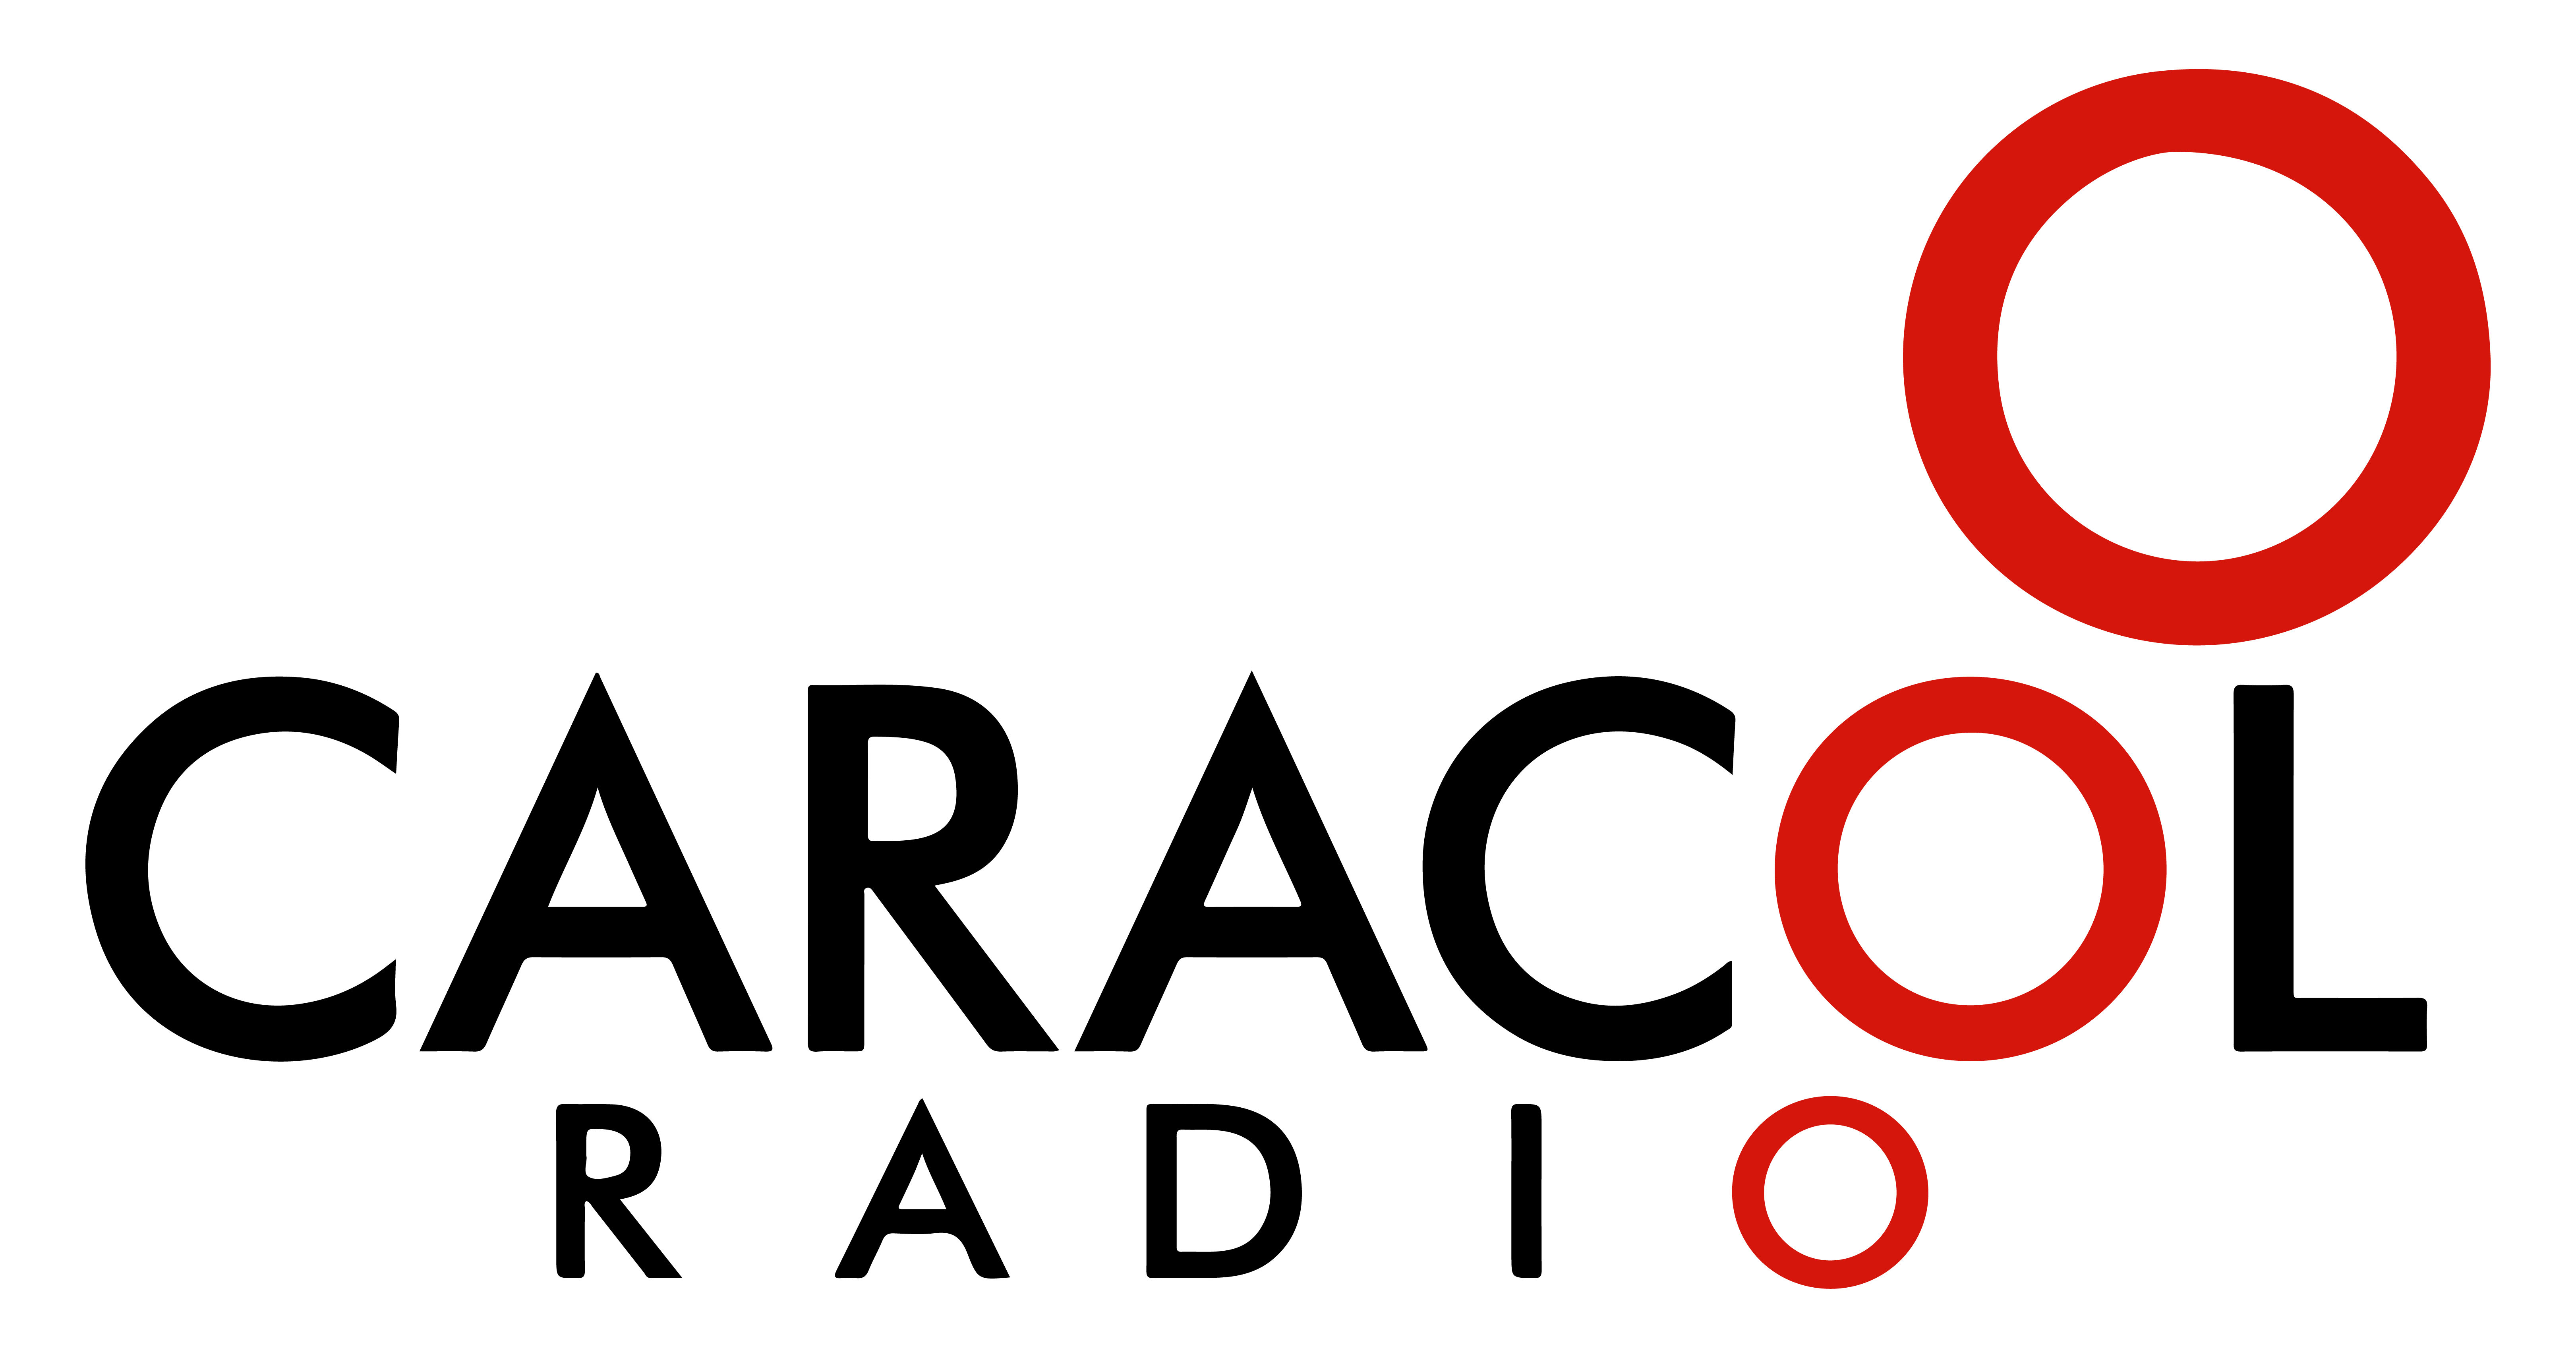 Caracol Radio Logo